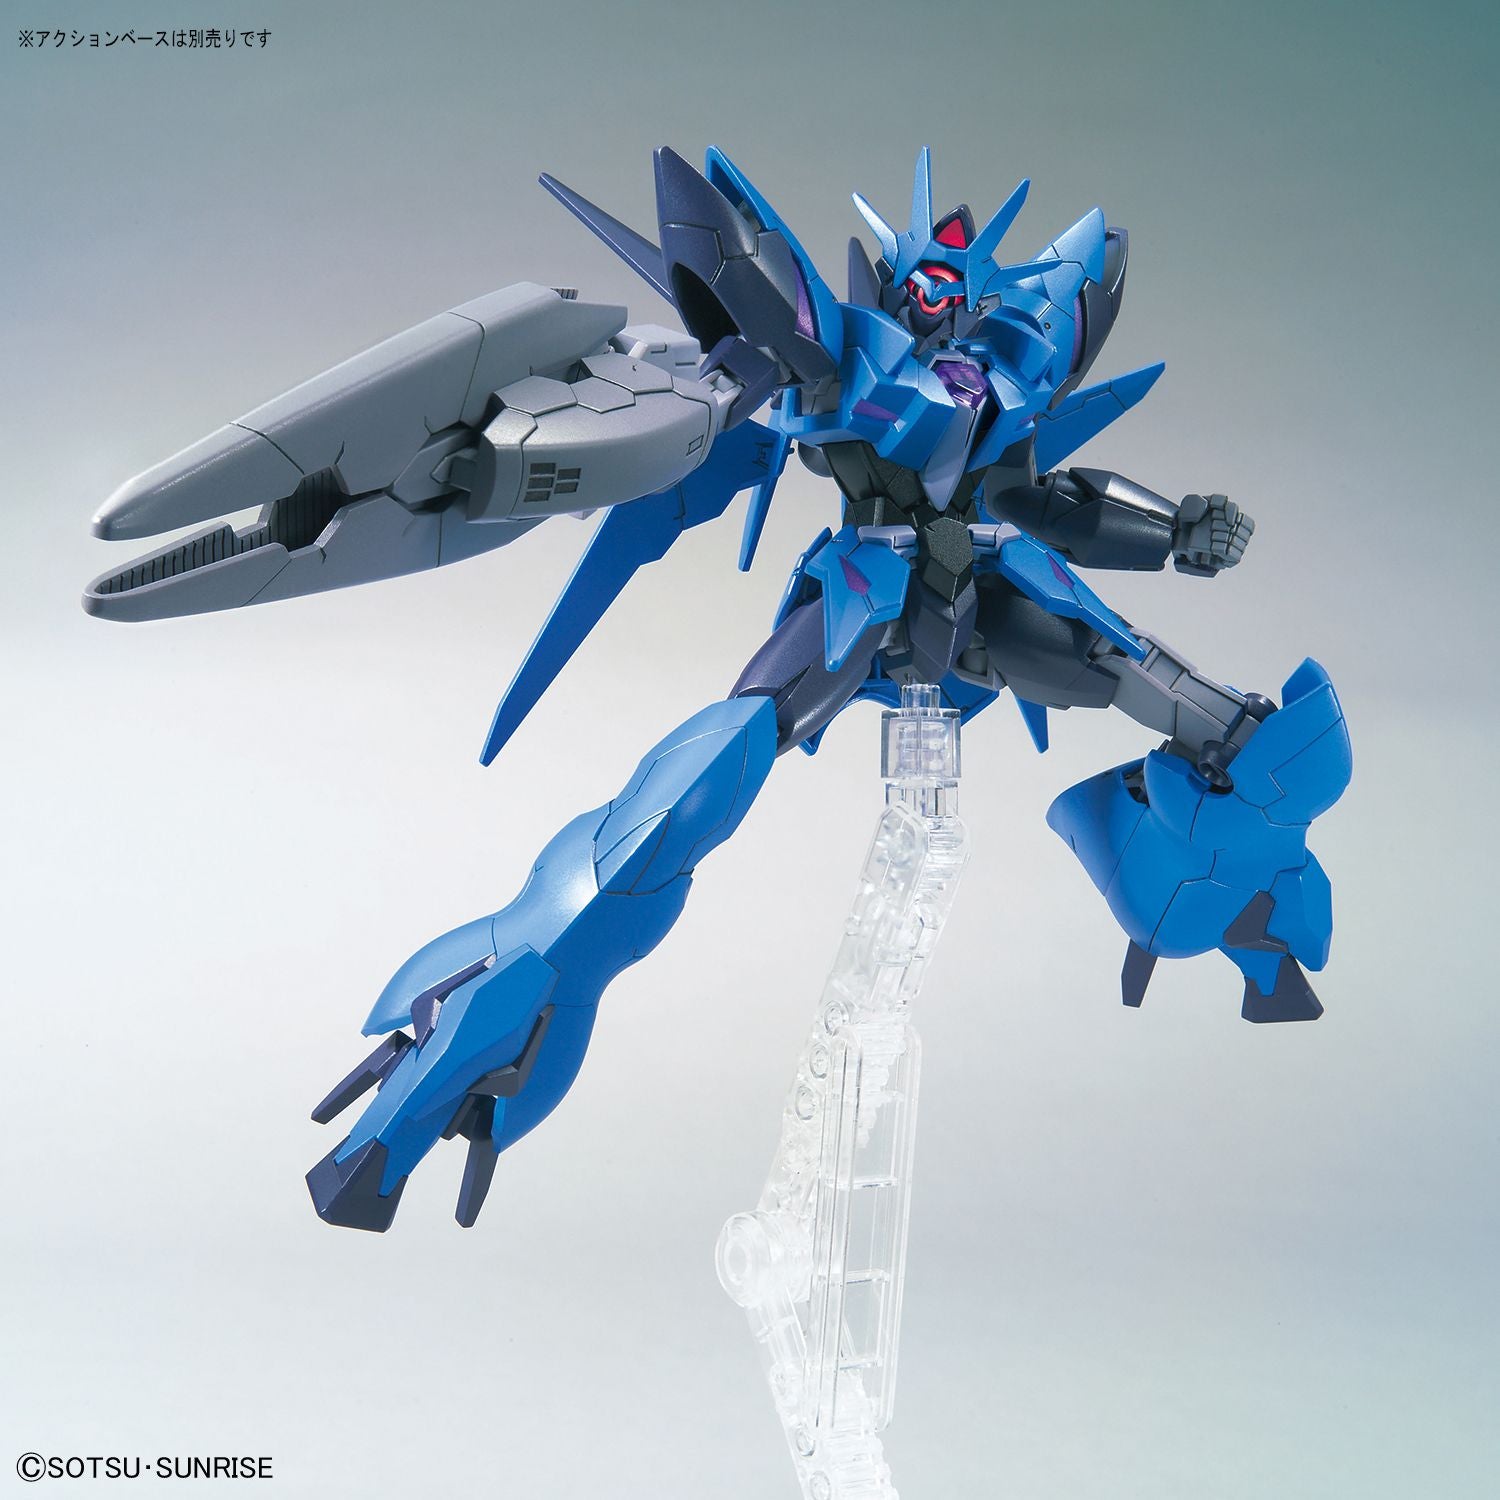 HGBD:R 1/144 Alus Earthree Gundam - High Grade Gundam Build Divers Re:RISE | Glacier Hobbies